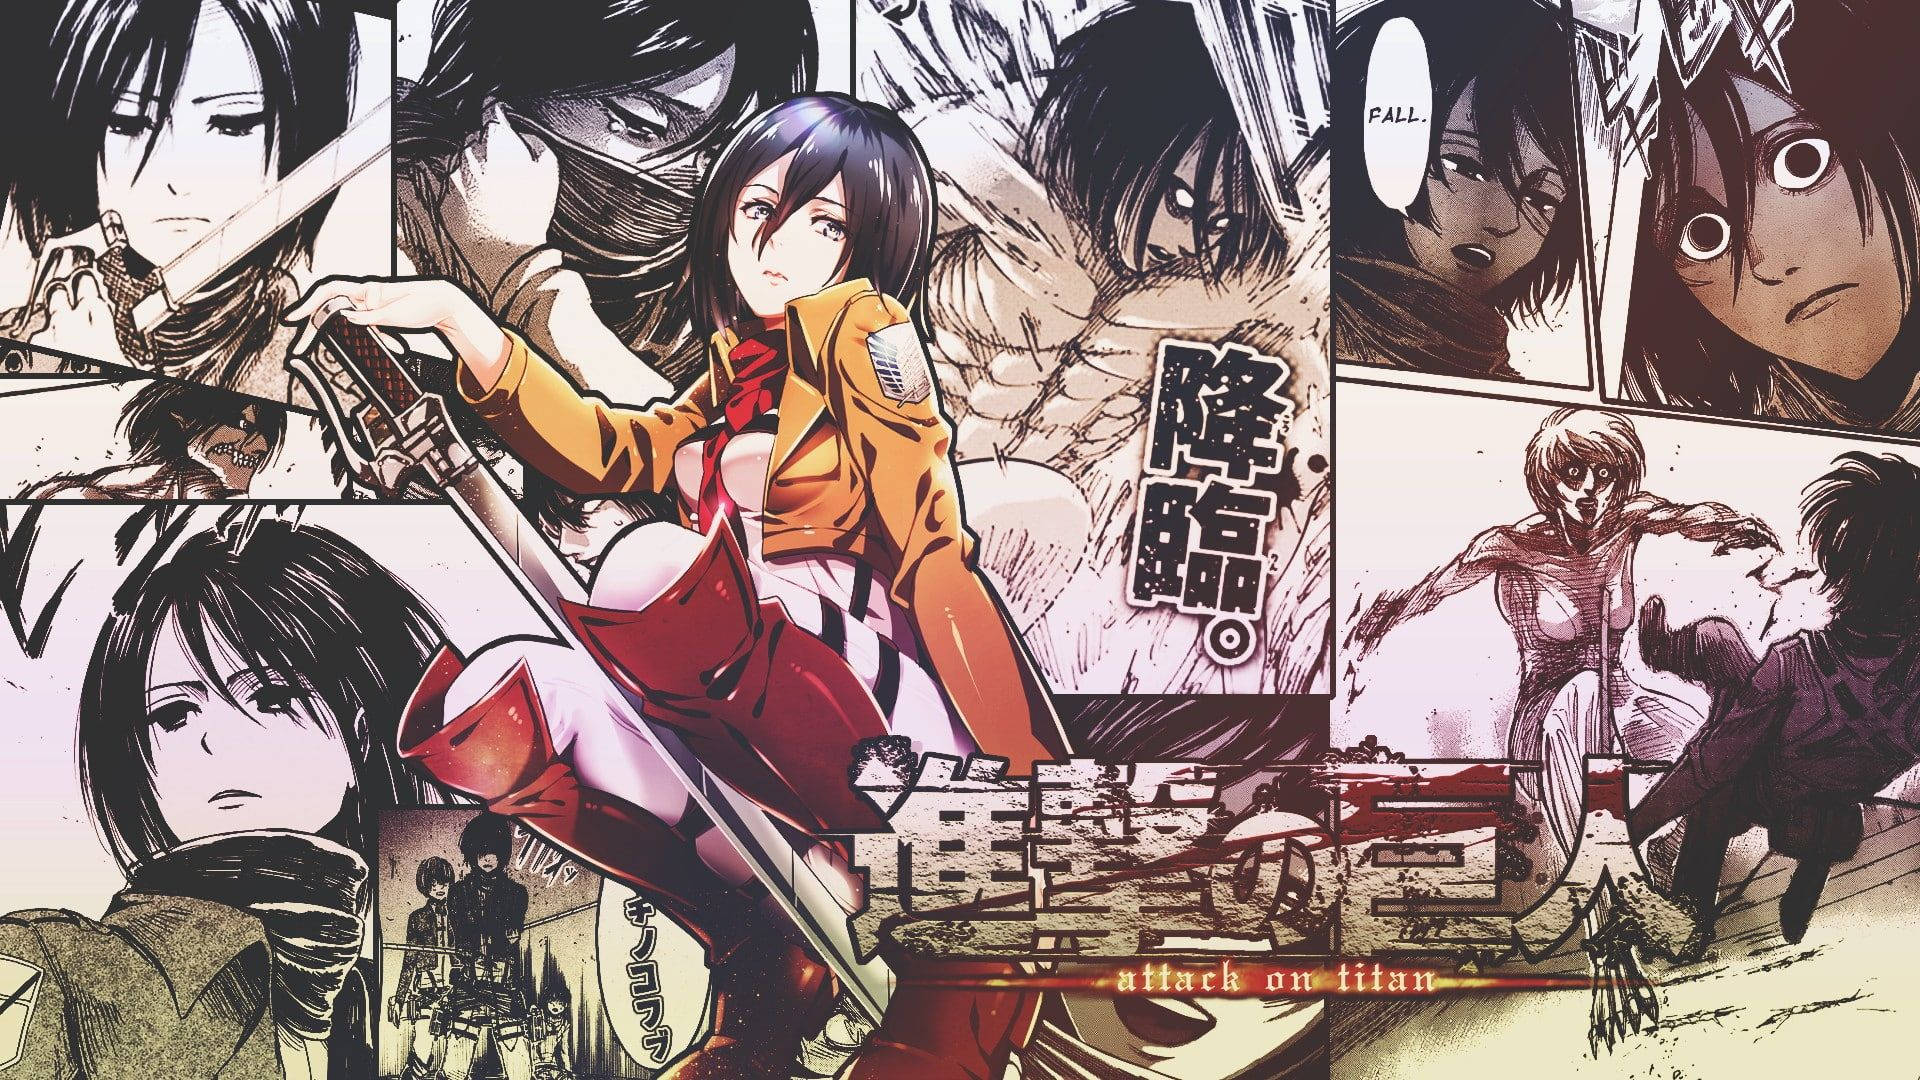 Mikasa Ackerman Manga Panel Background